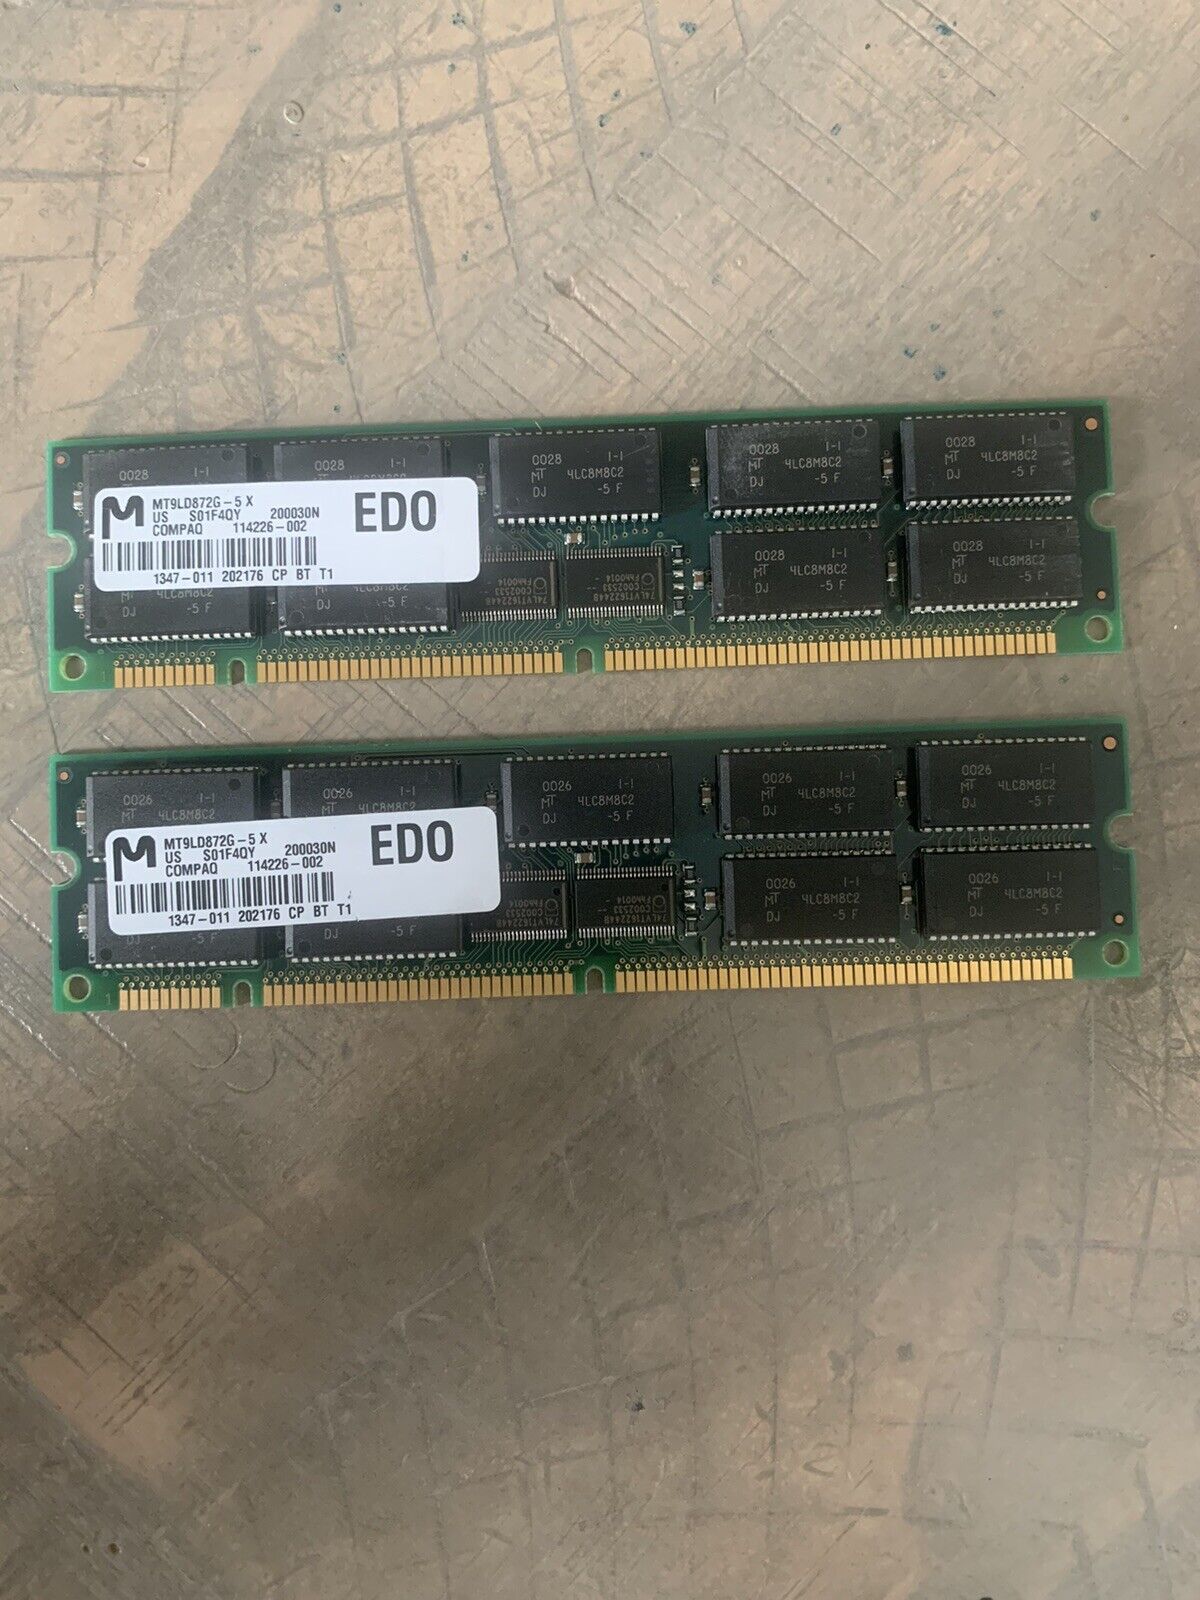 Lot of 2 Compaq MT9LD872G-5X, 64MB 168p 50ns Buffered EDO DIMM, NOS Ram